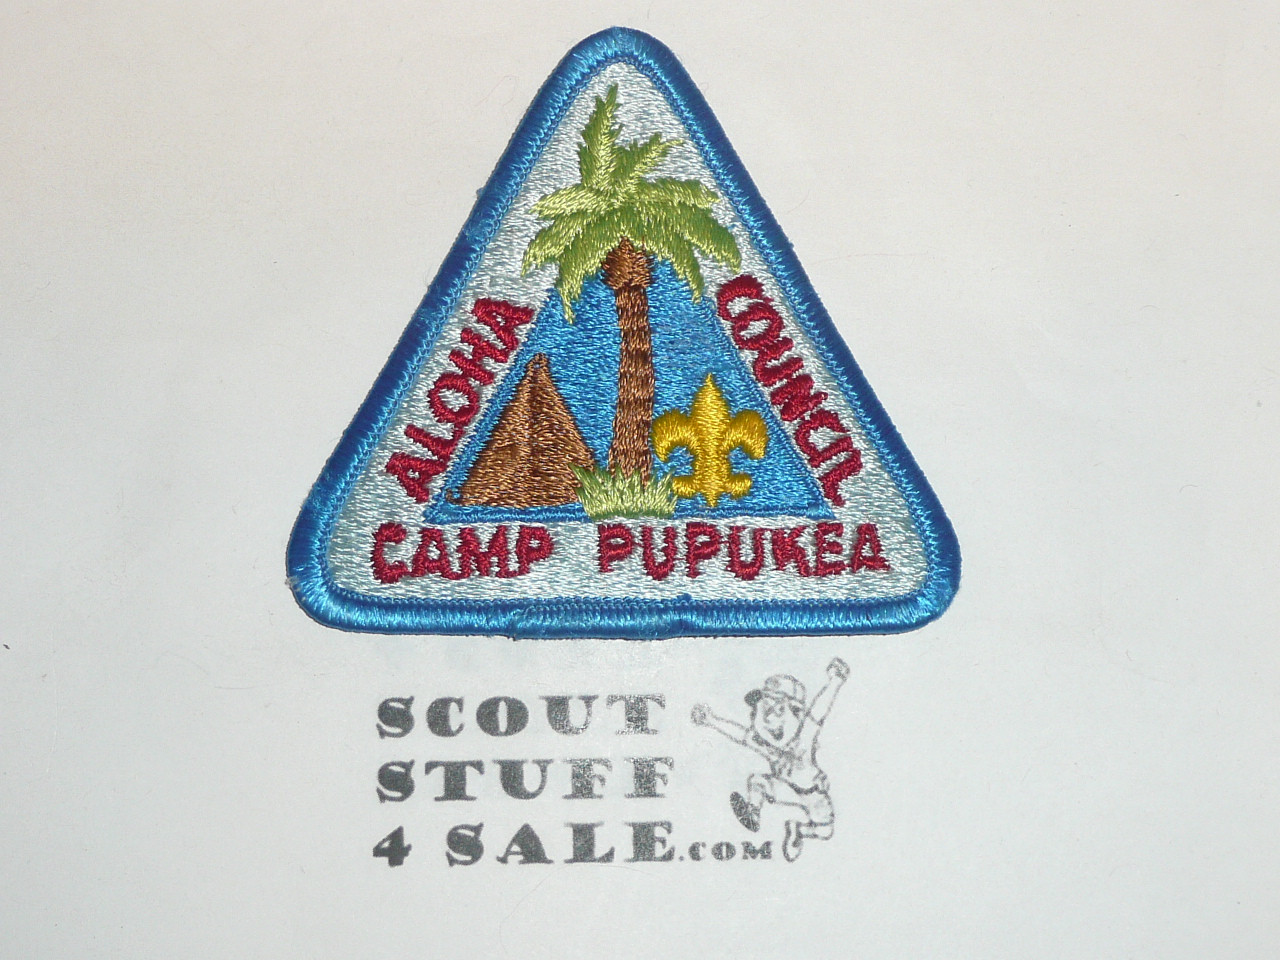 Camp Pupukea Patch, Aloha Council